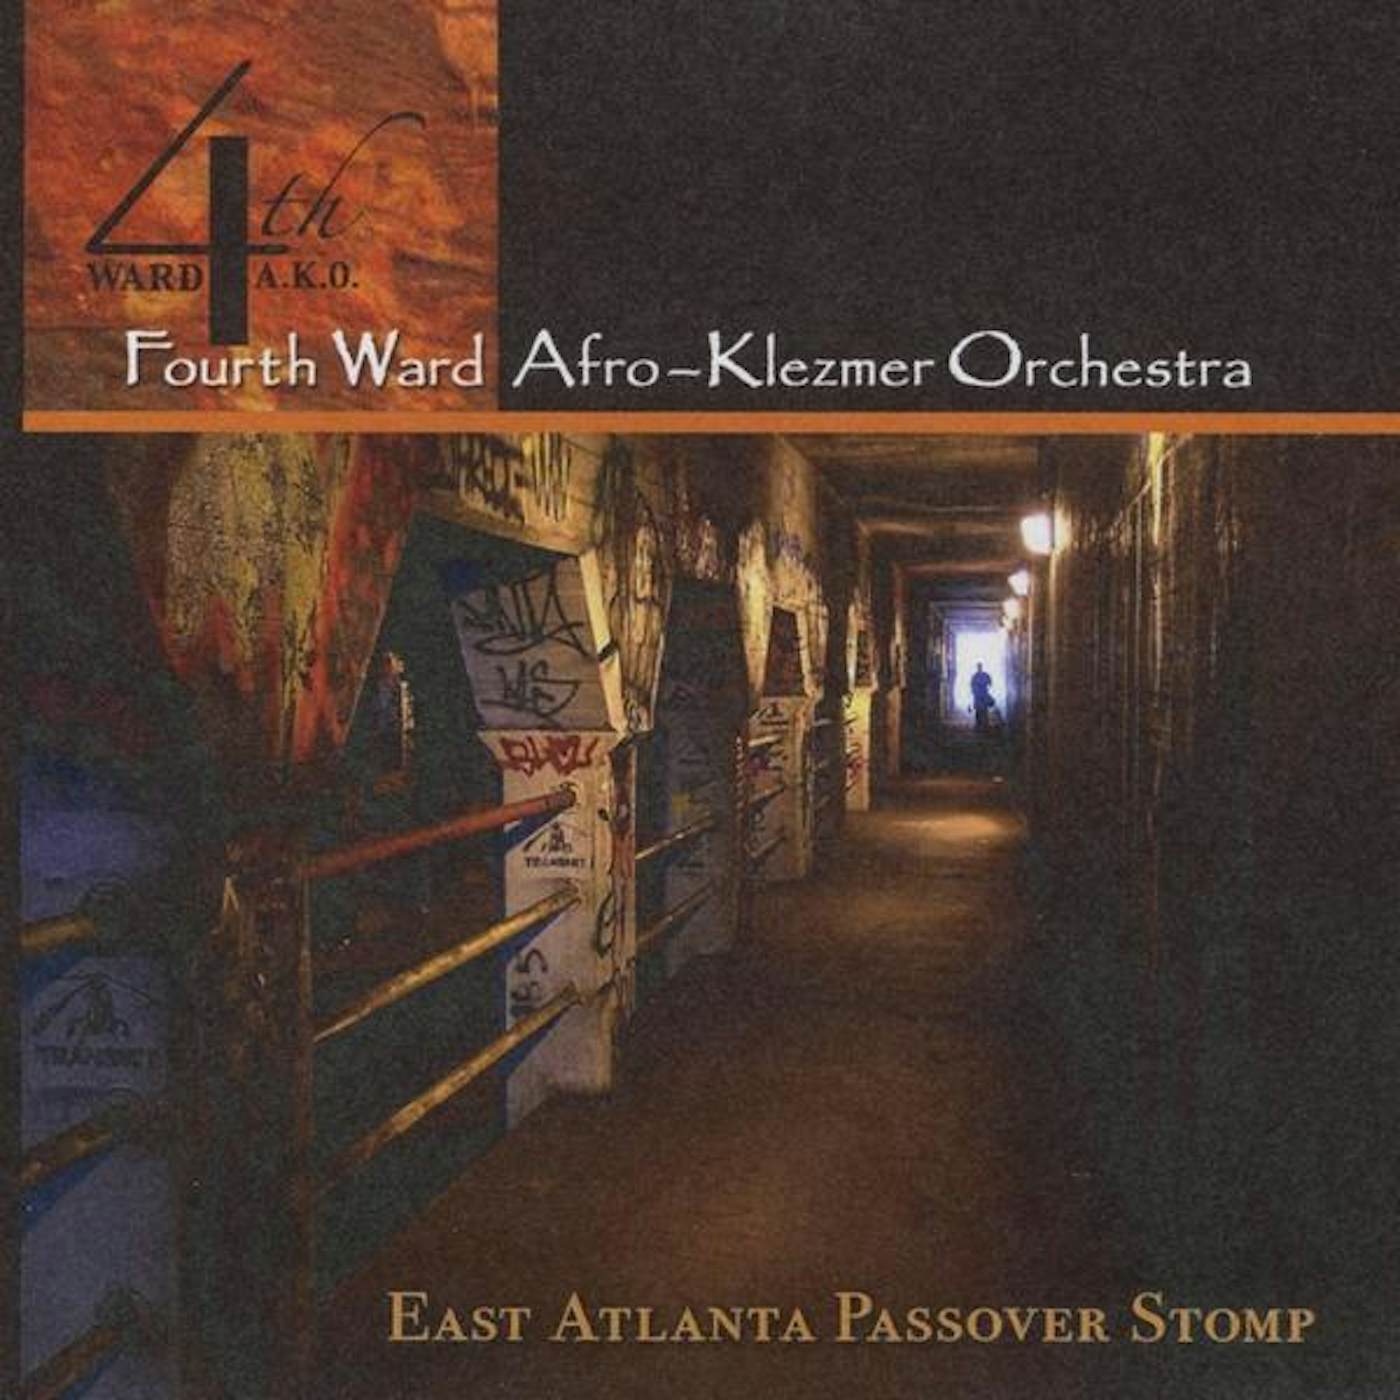 4th Ward Afro-Klezmer Orchestra EAST ATLANTA PASSOVER STOMP CD